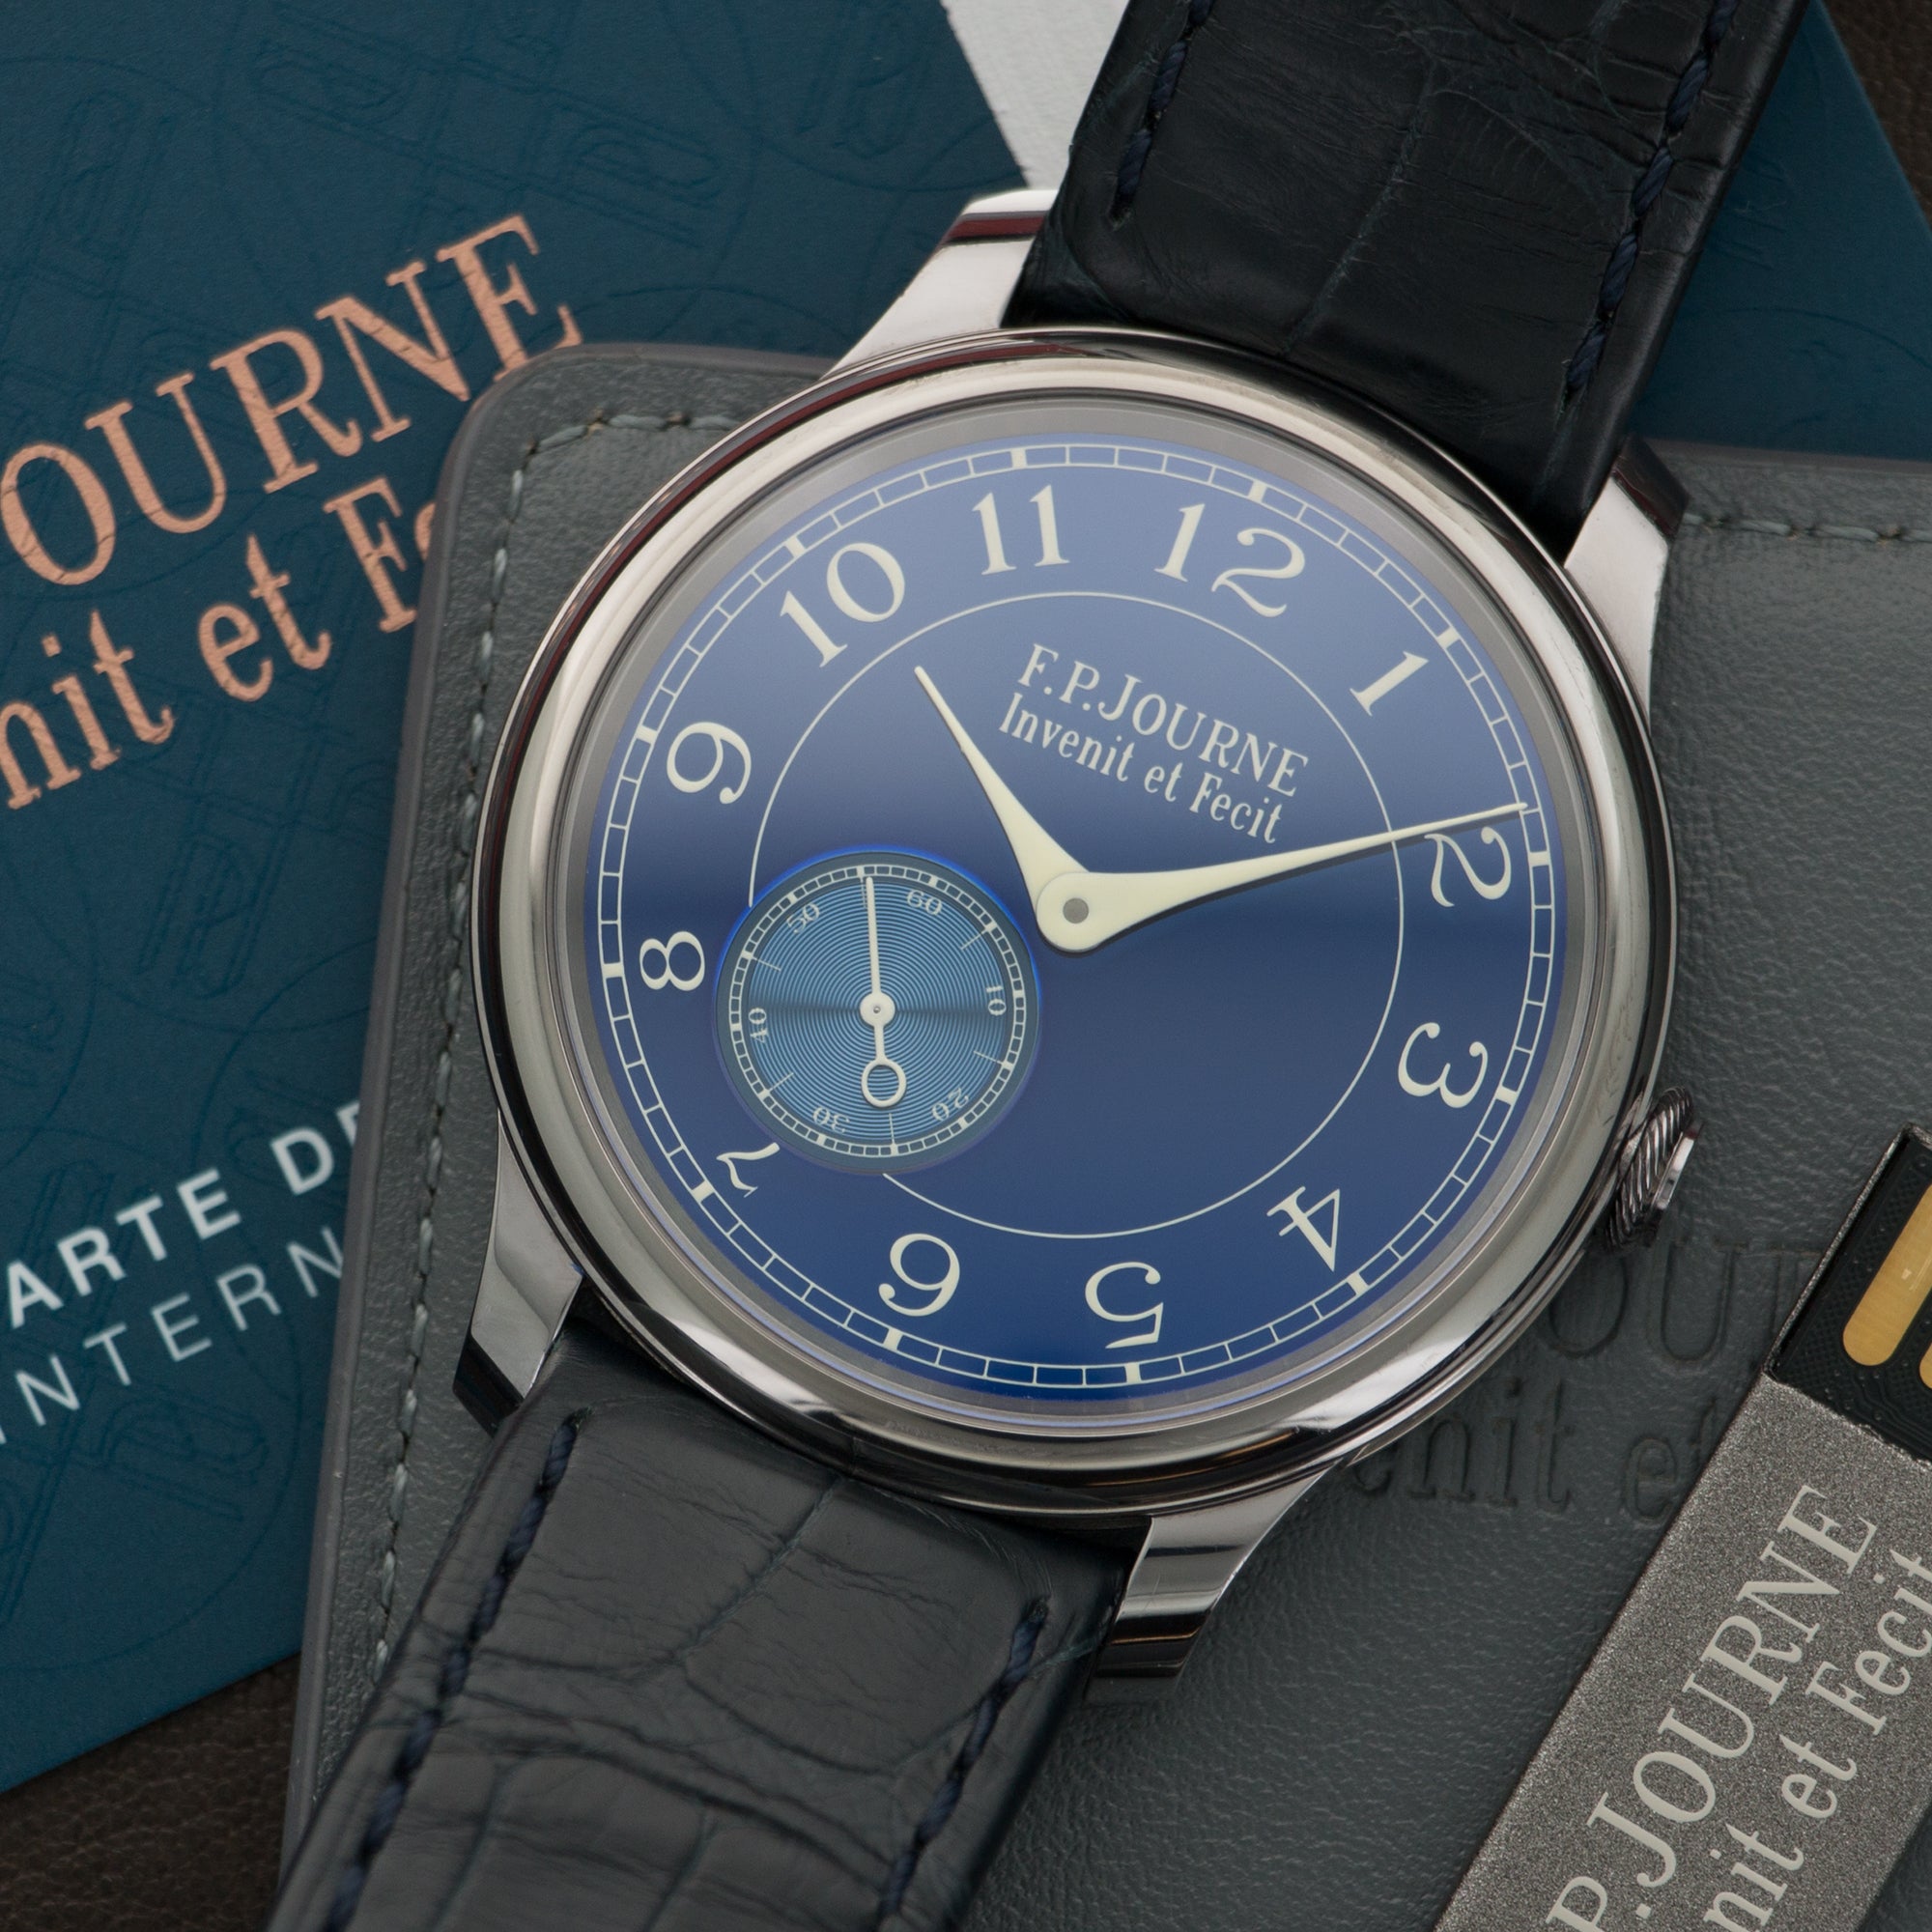 FP Journe - F.P Journe Tantalum Chronometre Bleu Watch - The Keystone Watches